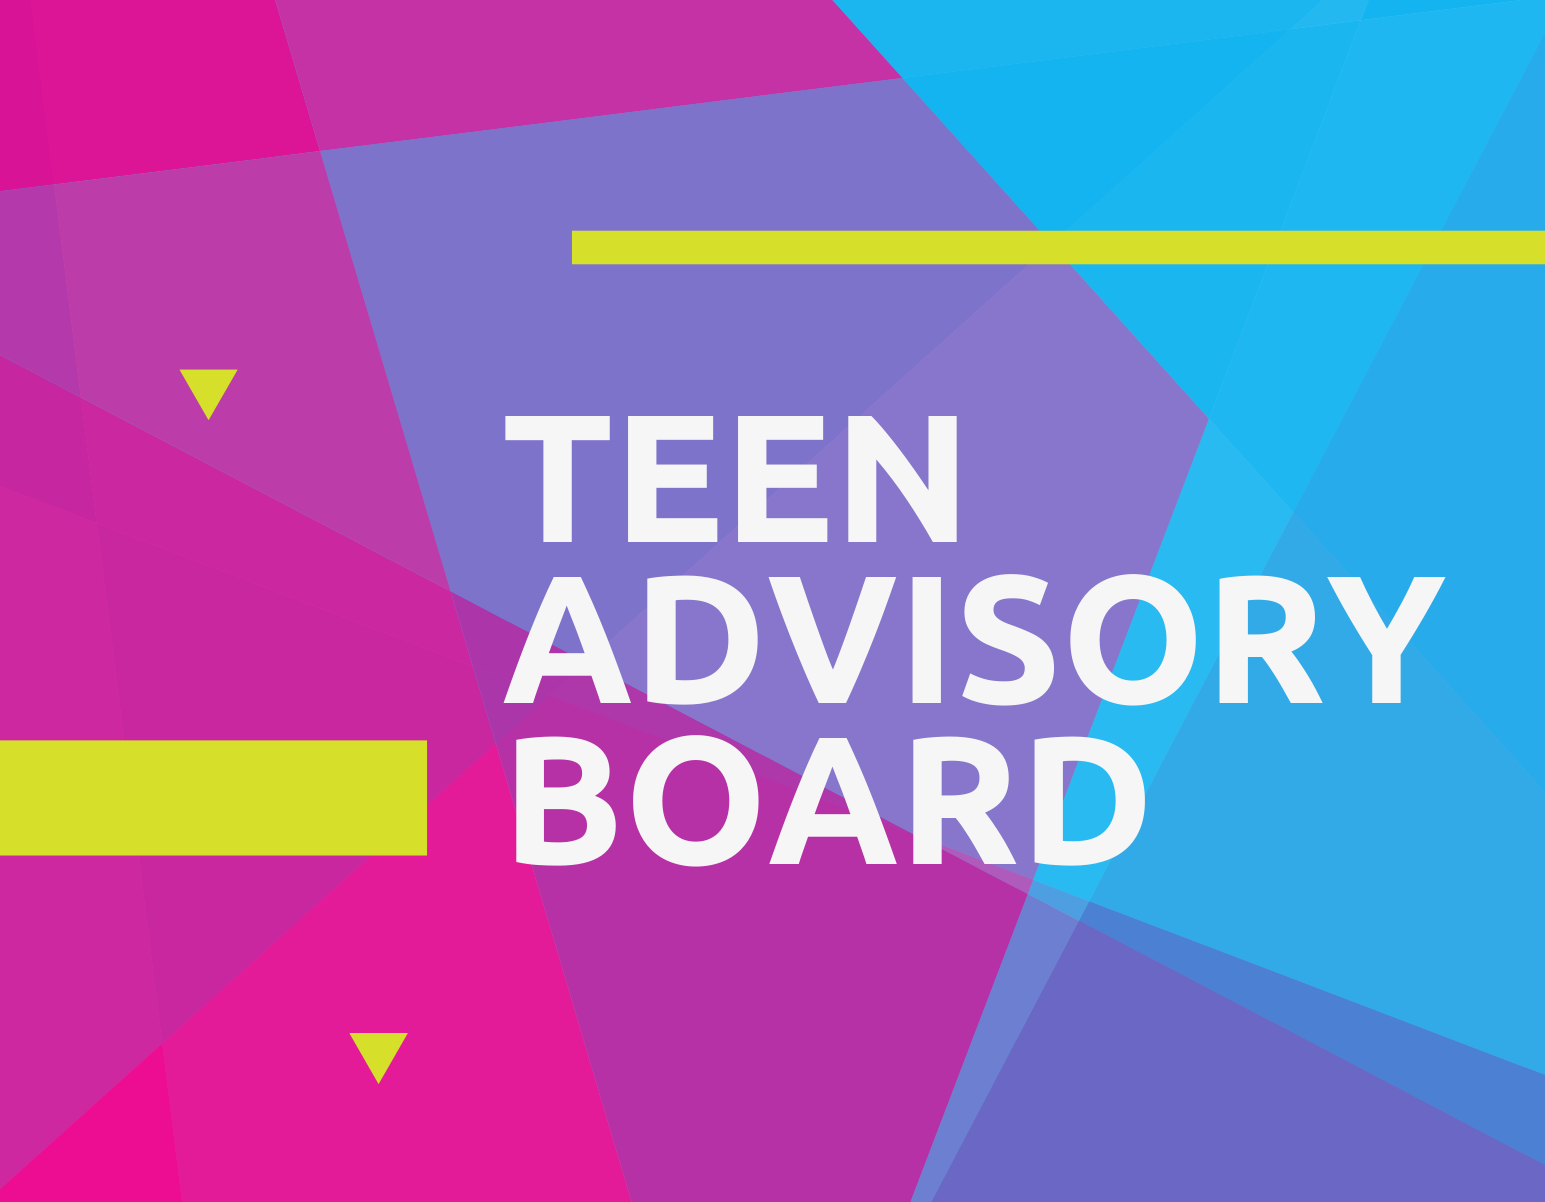 Teen Advisory Board